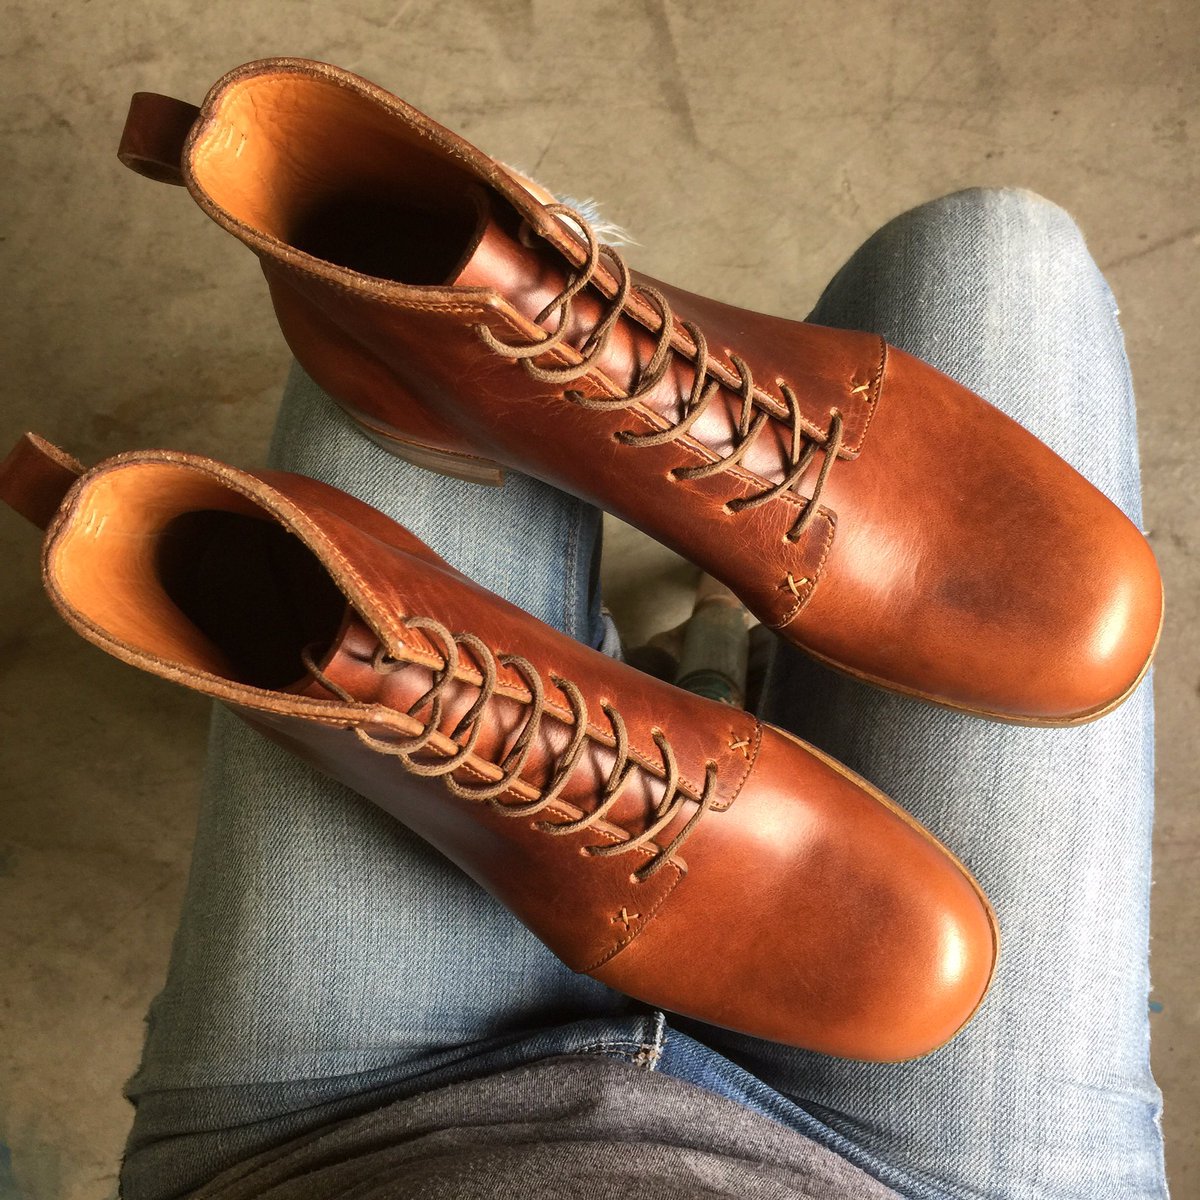 Boots made with love for my love.  

#patienceisavirtue #slowfashion #handmadeboots #madetomeasure #shoemaker #shoemaking #bootmaking #design #shoedesign #vegtan #horween #horweendublin #madeinvancouver #yvr #madeincanada #madeinbc